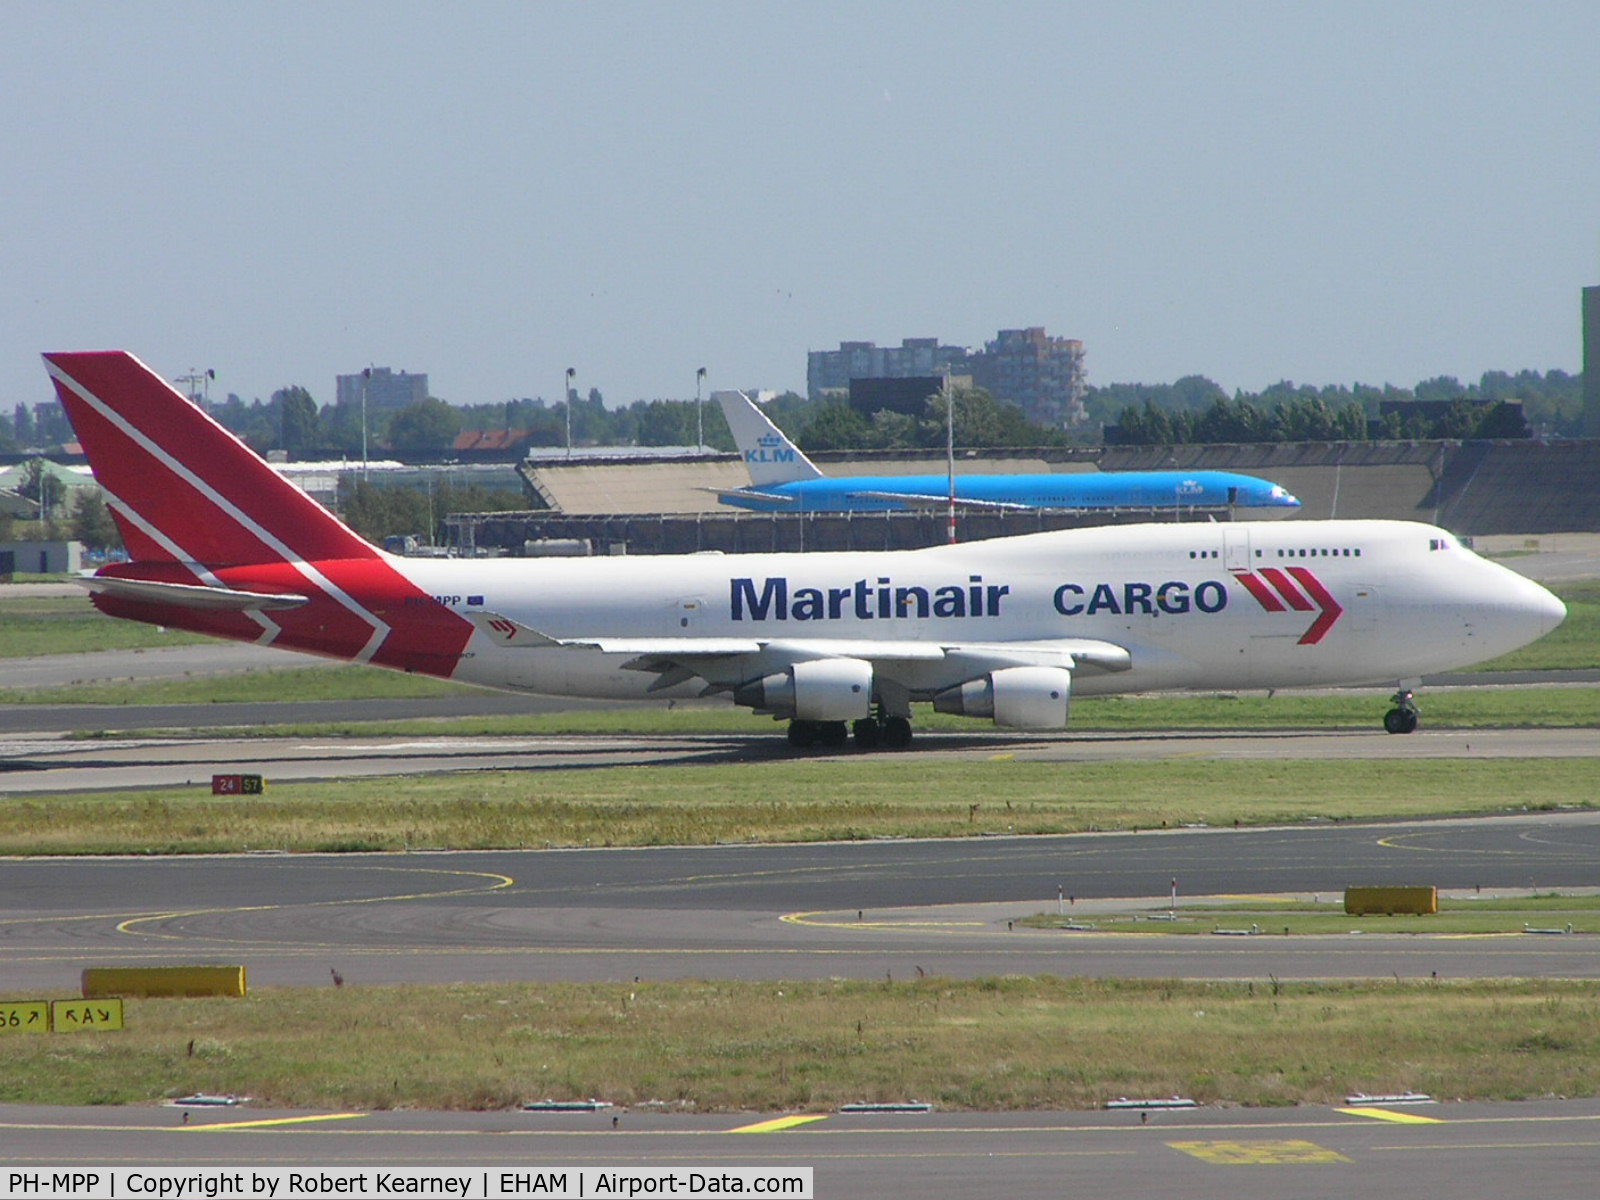 PH-MPP, 1989 Boeing 747-412/BCF C/N 24061, MartinAir lining up